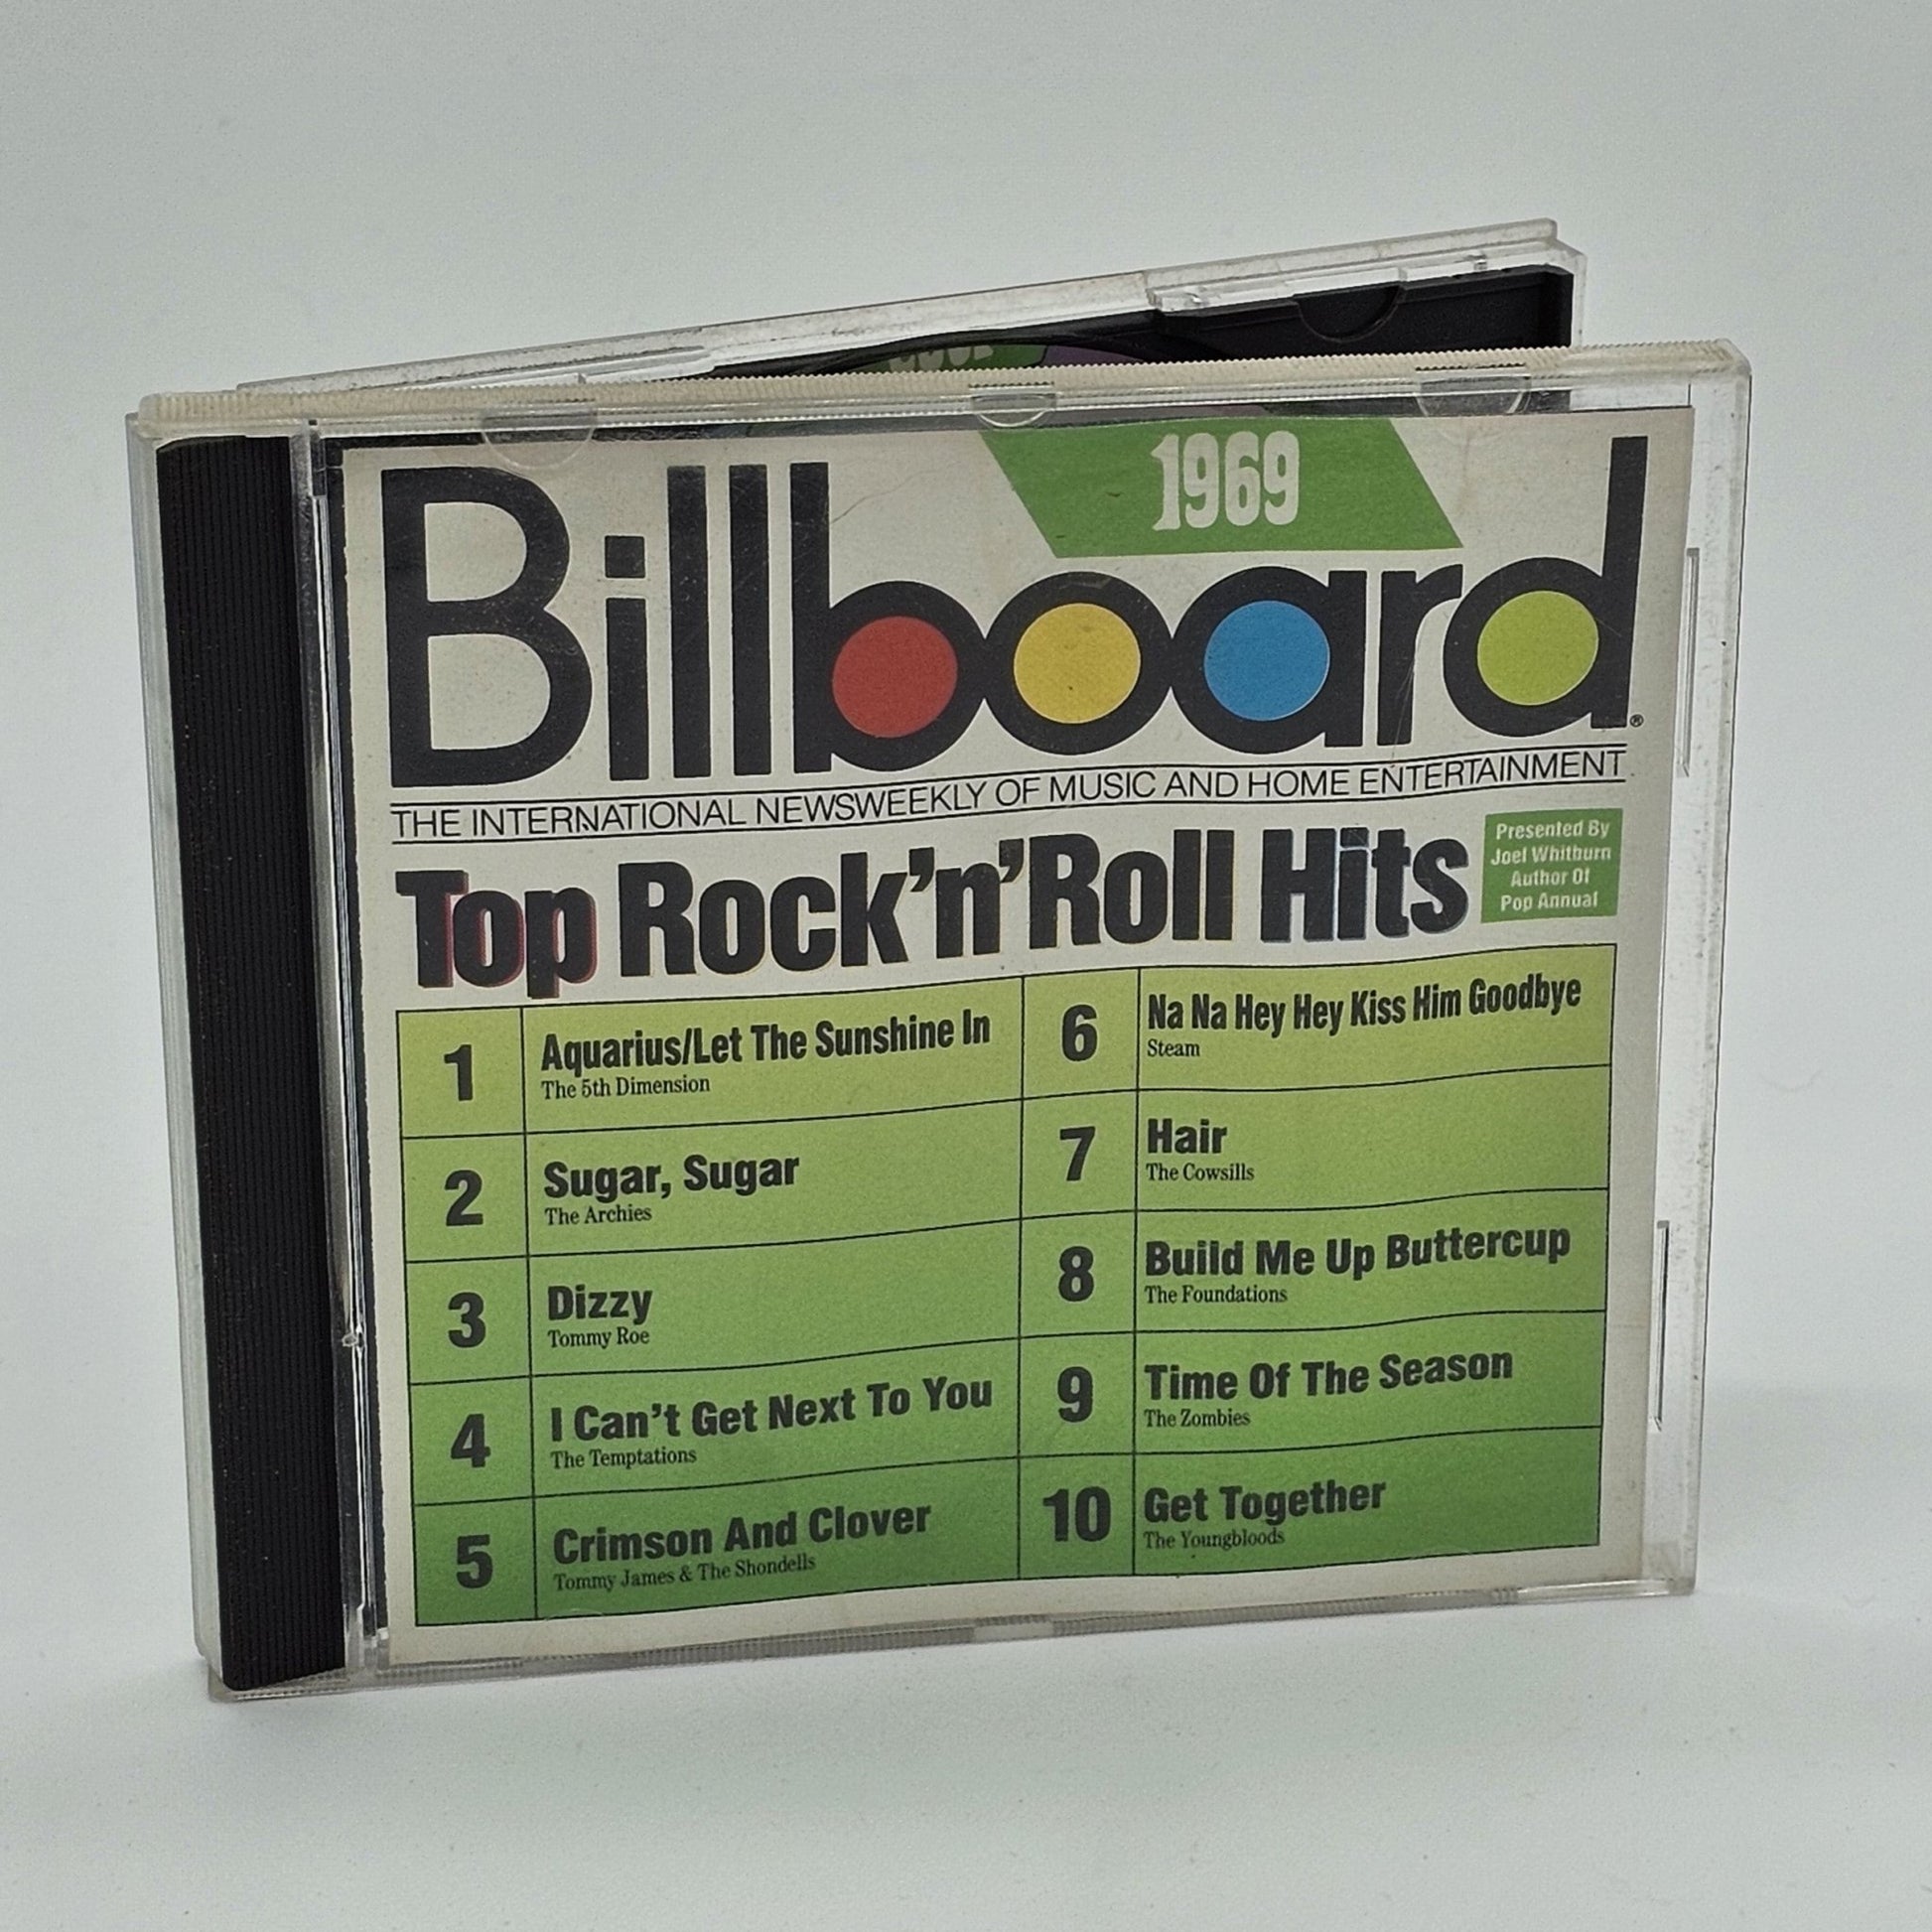 Rhino - Billboard Top Rock 'N' Roll Hits 1969 | CD - Compact Disc - Steady Bunny Shop